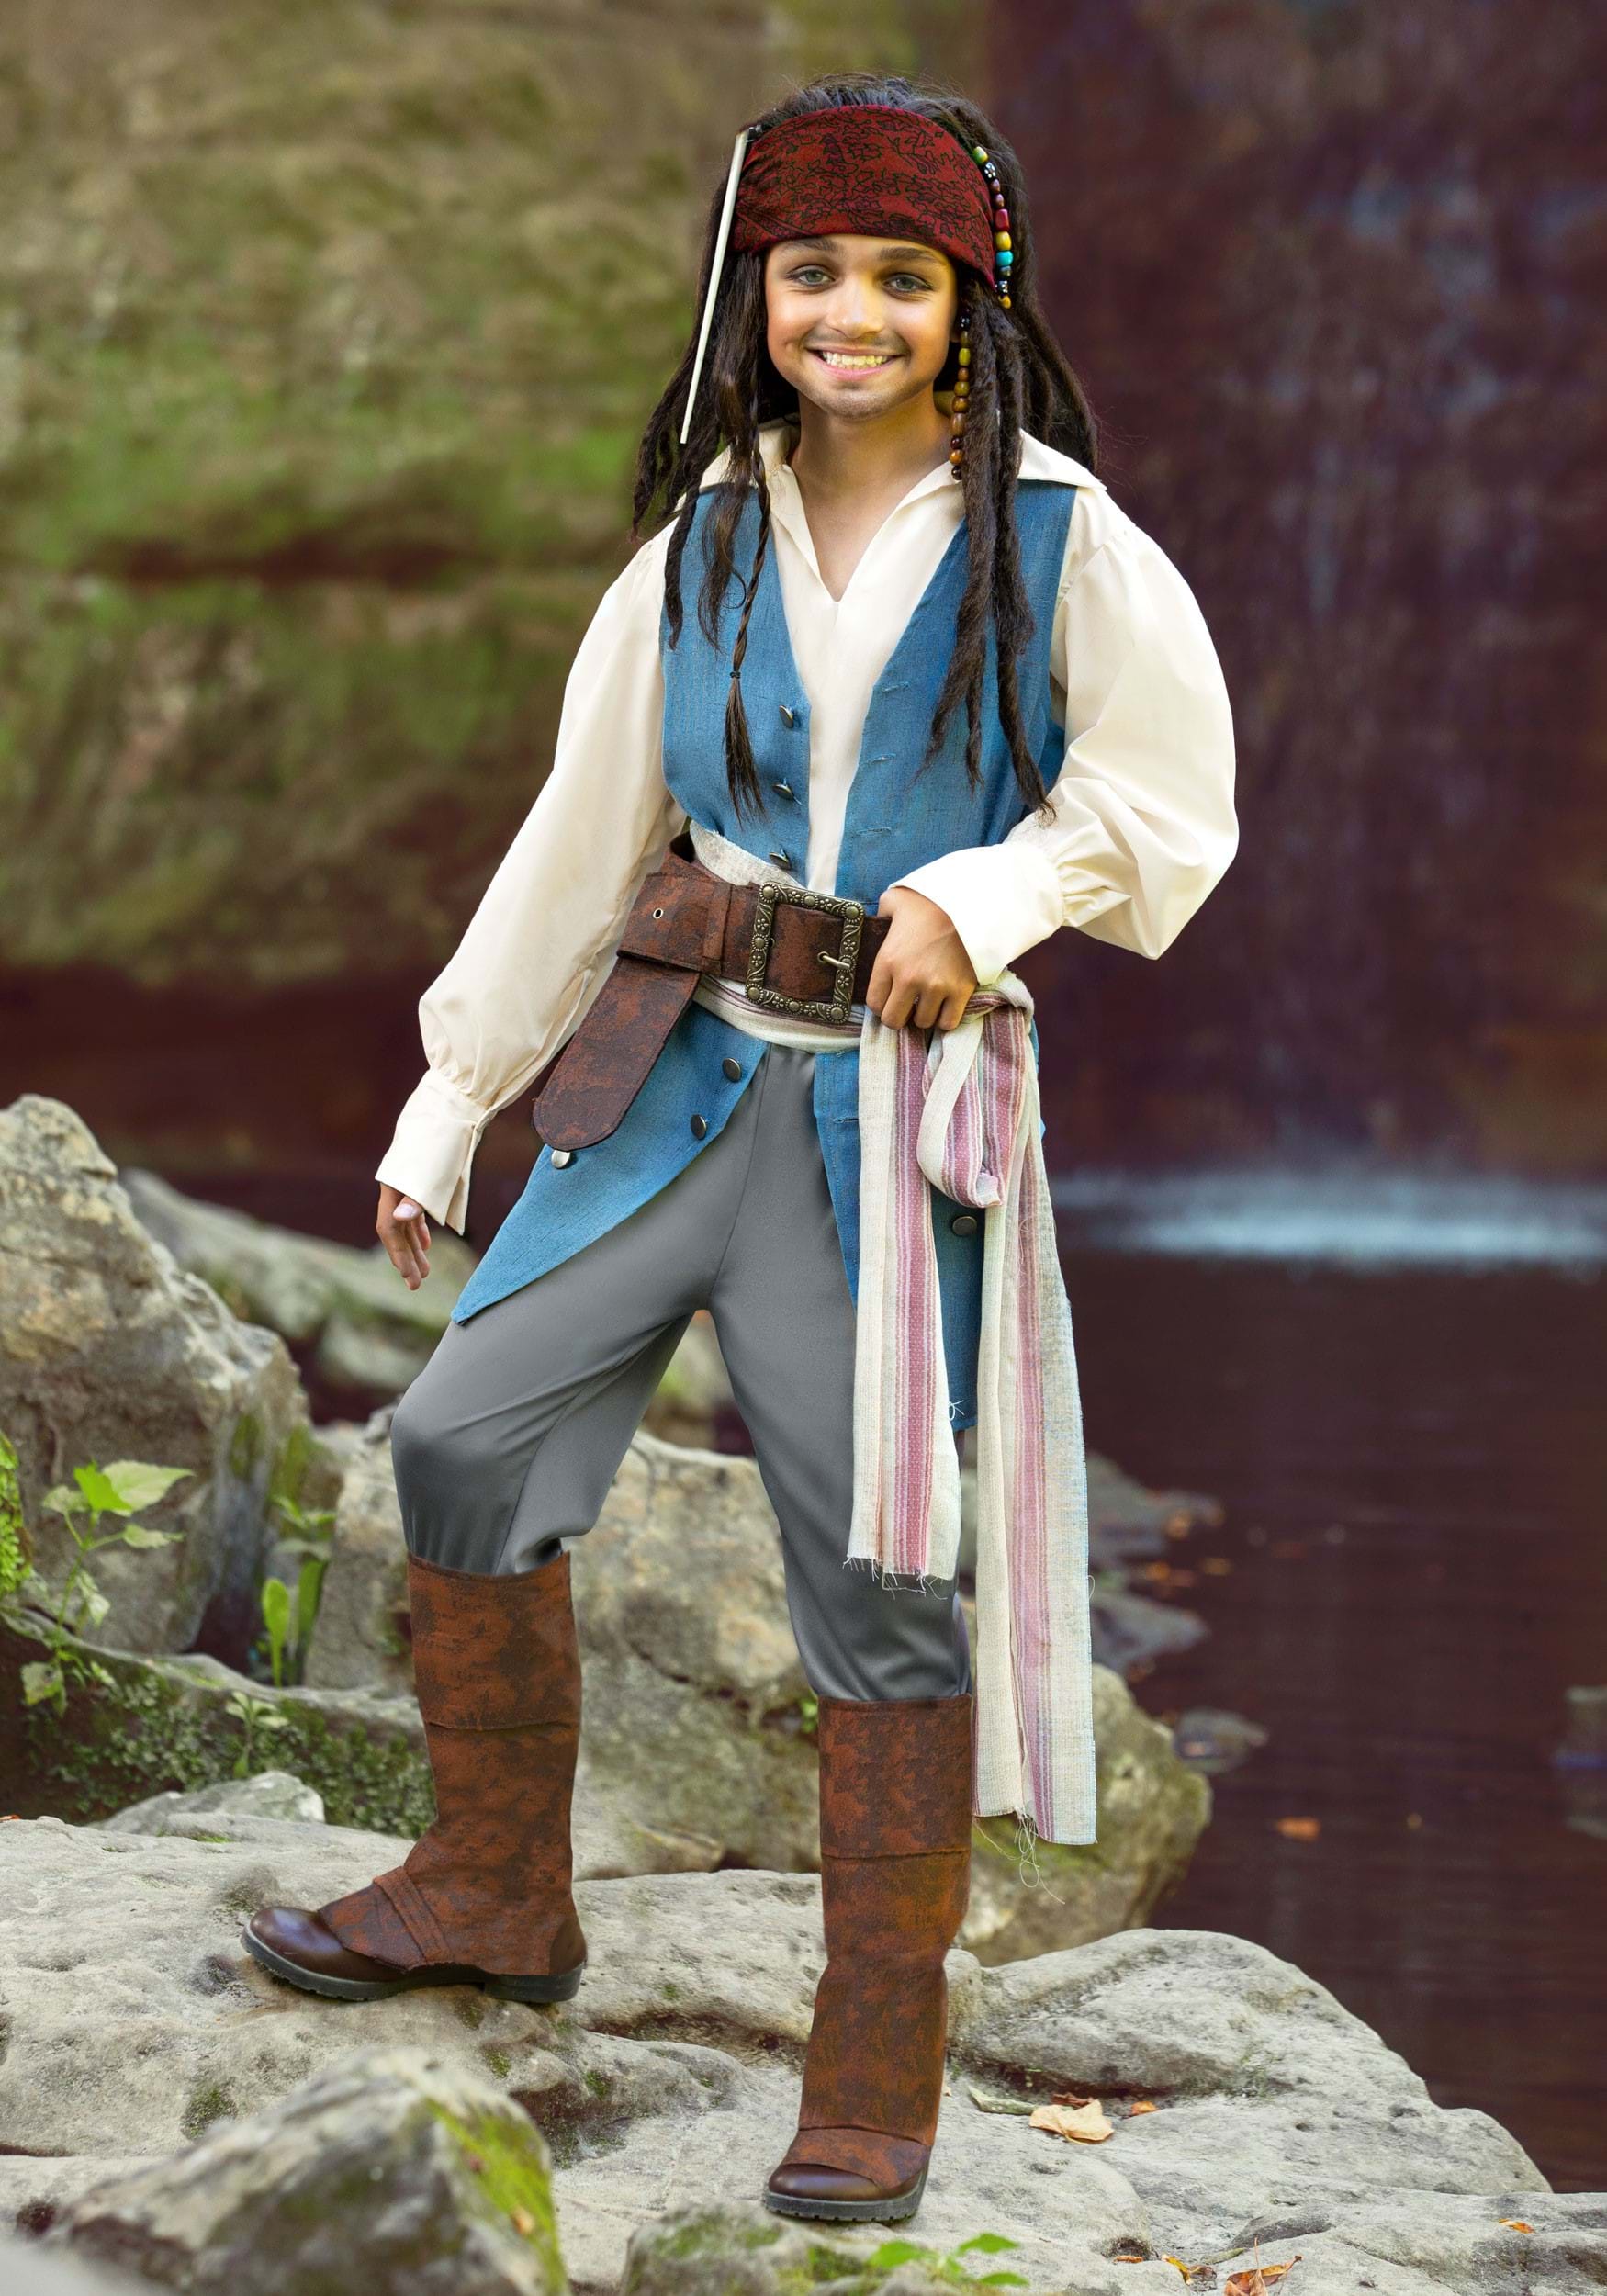 Captain Jack Sparrow Halloween Costume